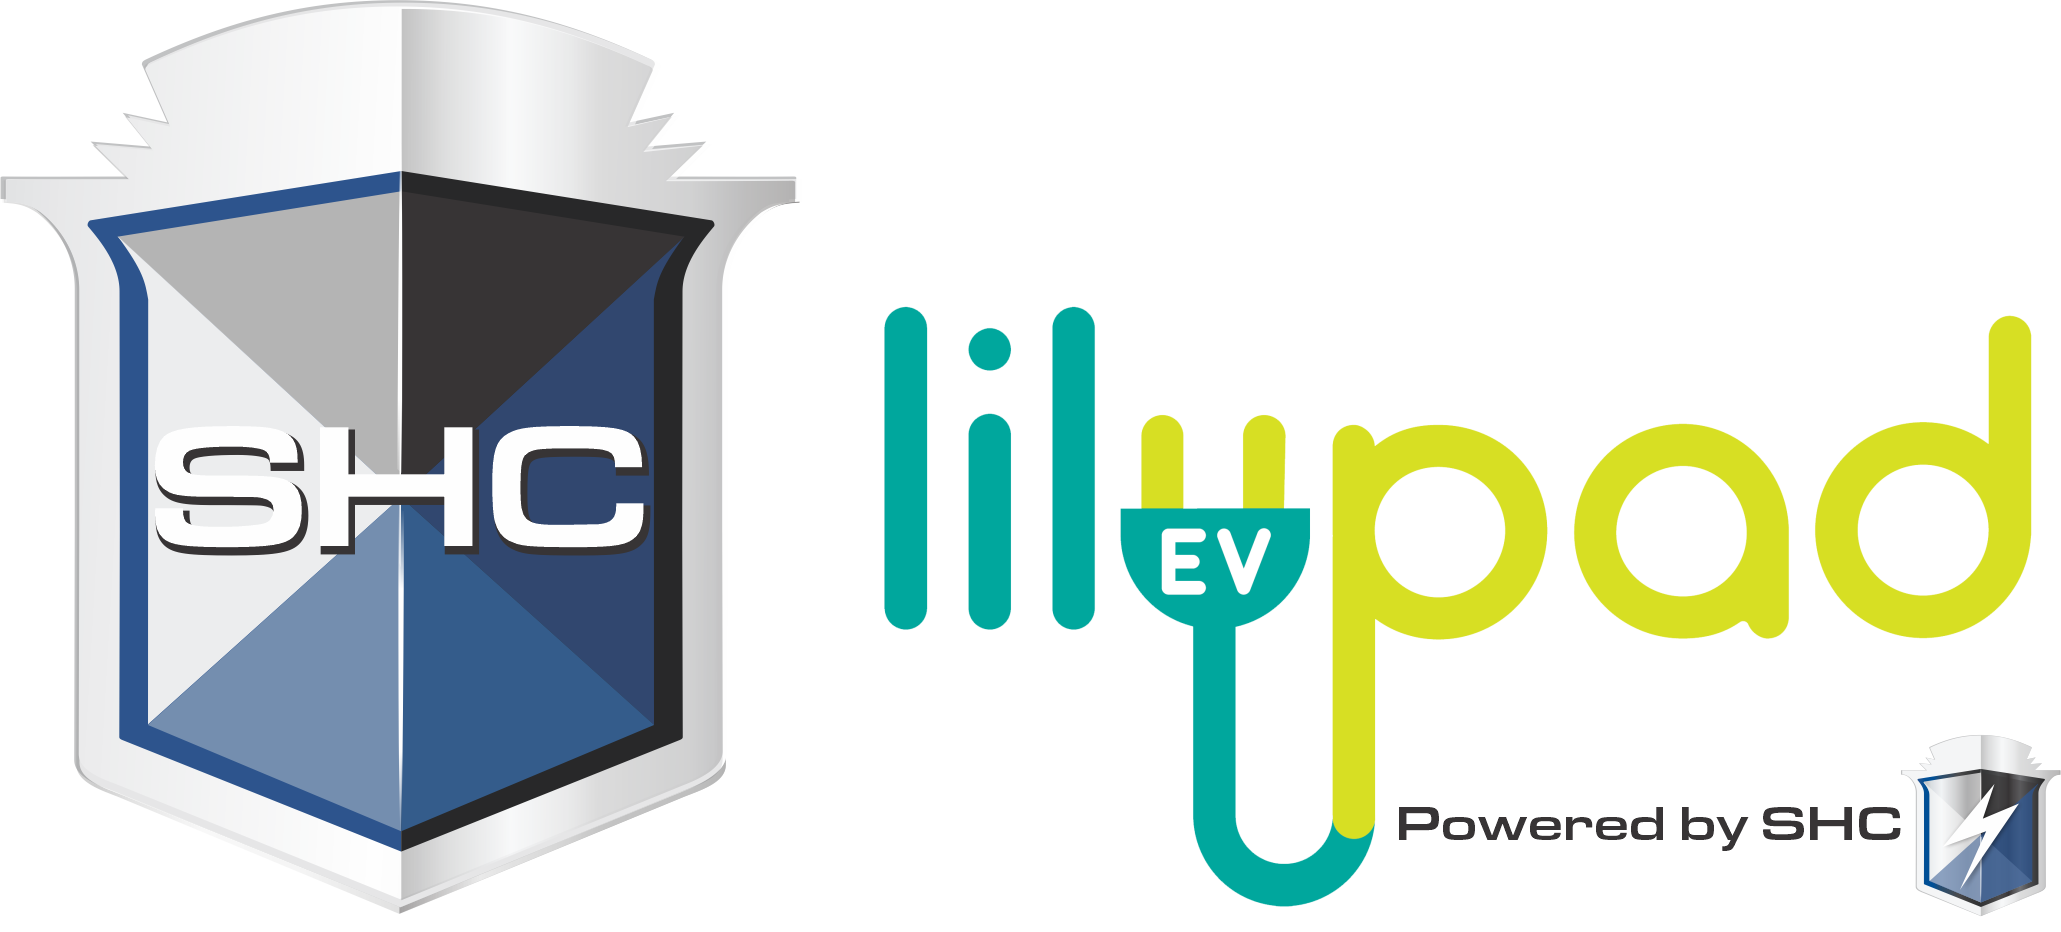 Shields Harper and Lilypad EV LLC Power by SHC